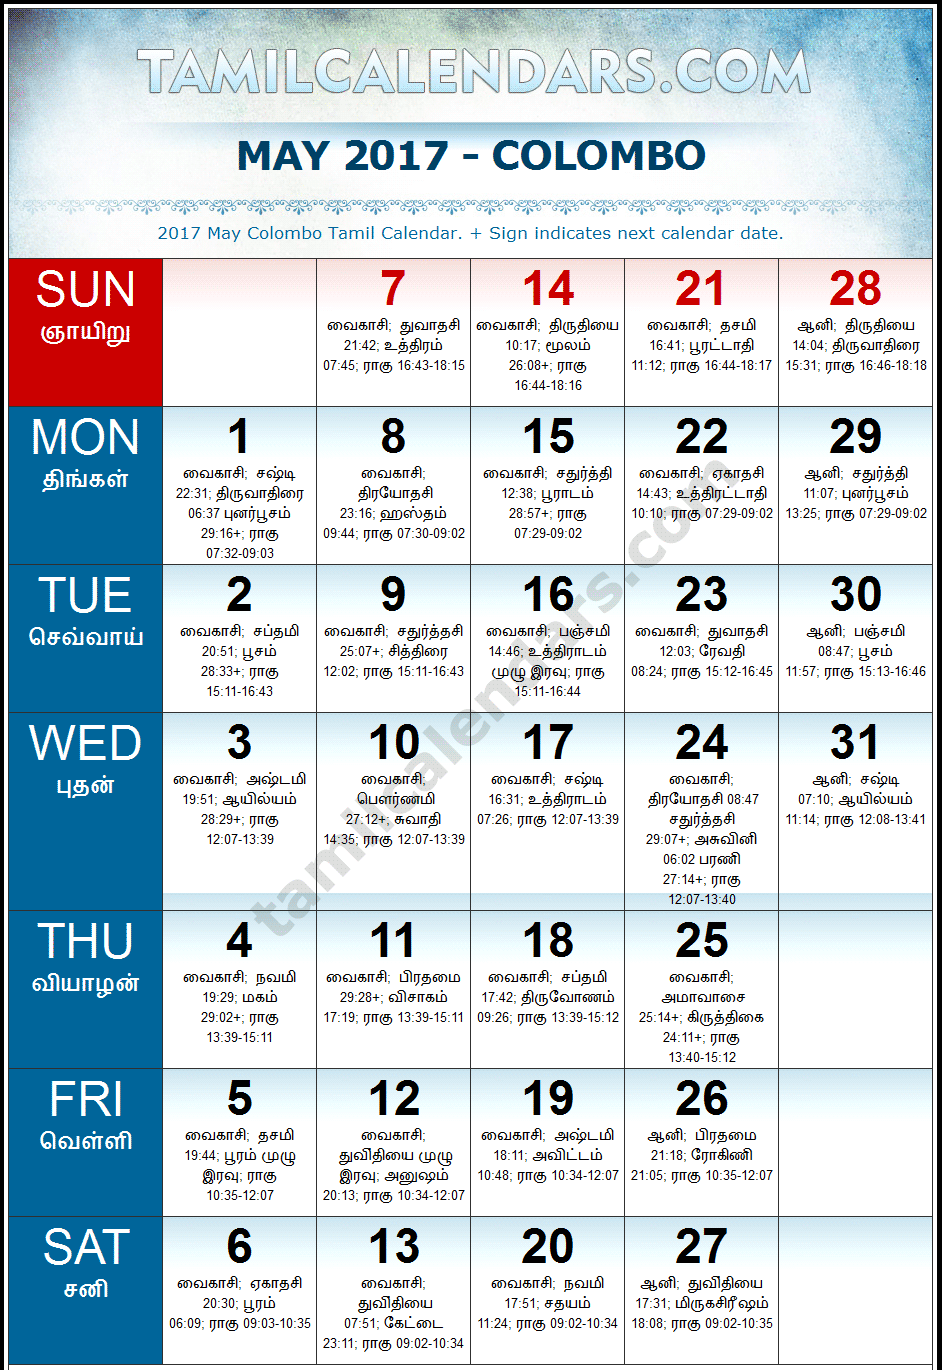 May 2017 Tamil Calendar for Sri Lanka (Colombo)